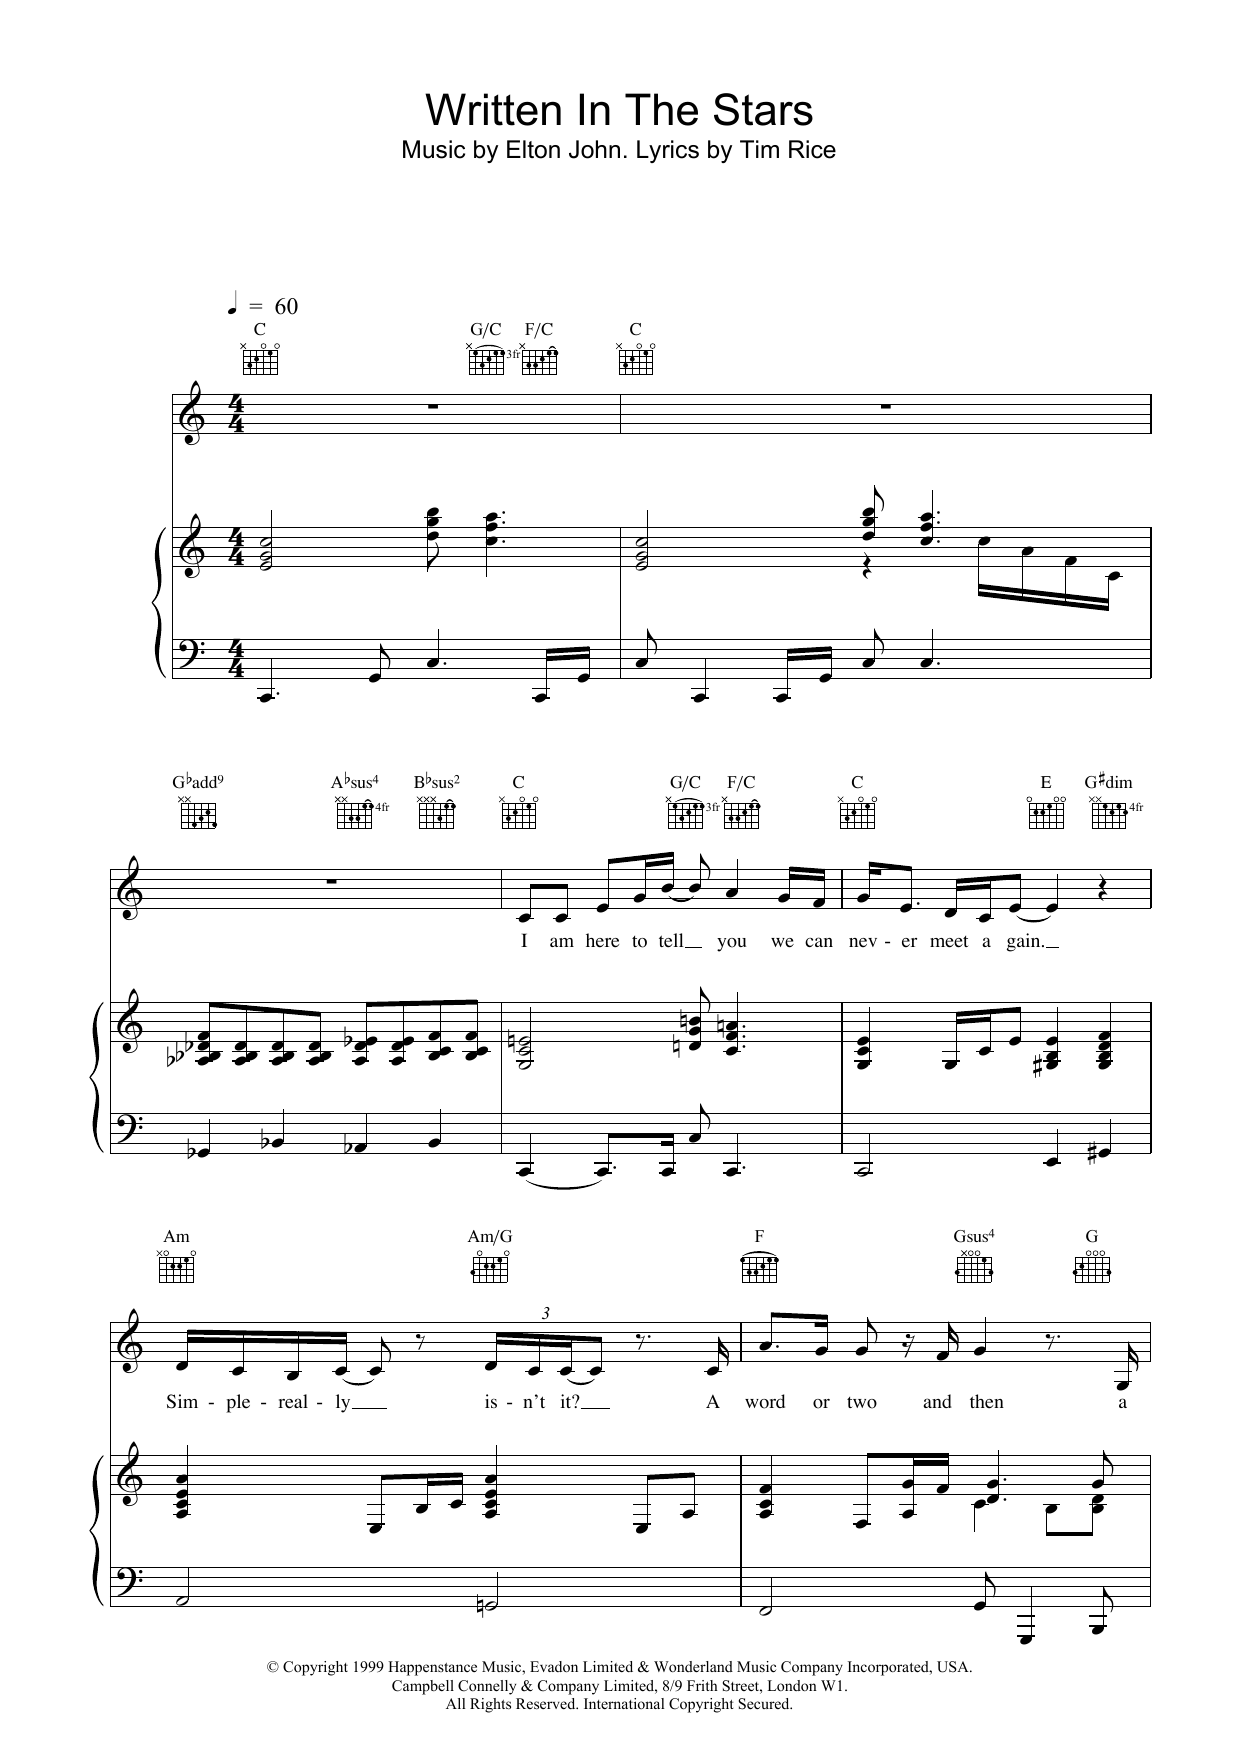 Elton John & LeAnn Rimes Written In The Stars sheet music notes and chords. Download Printable PDF.